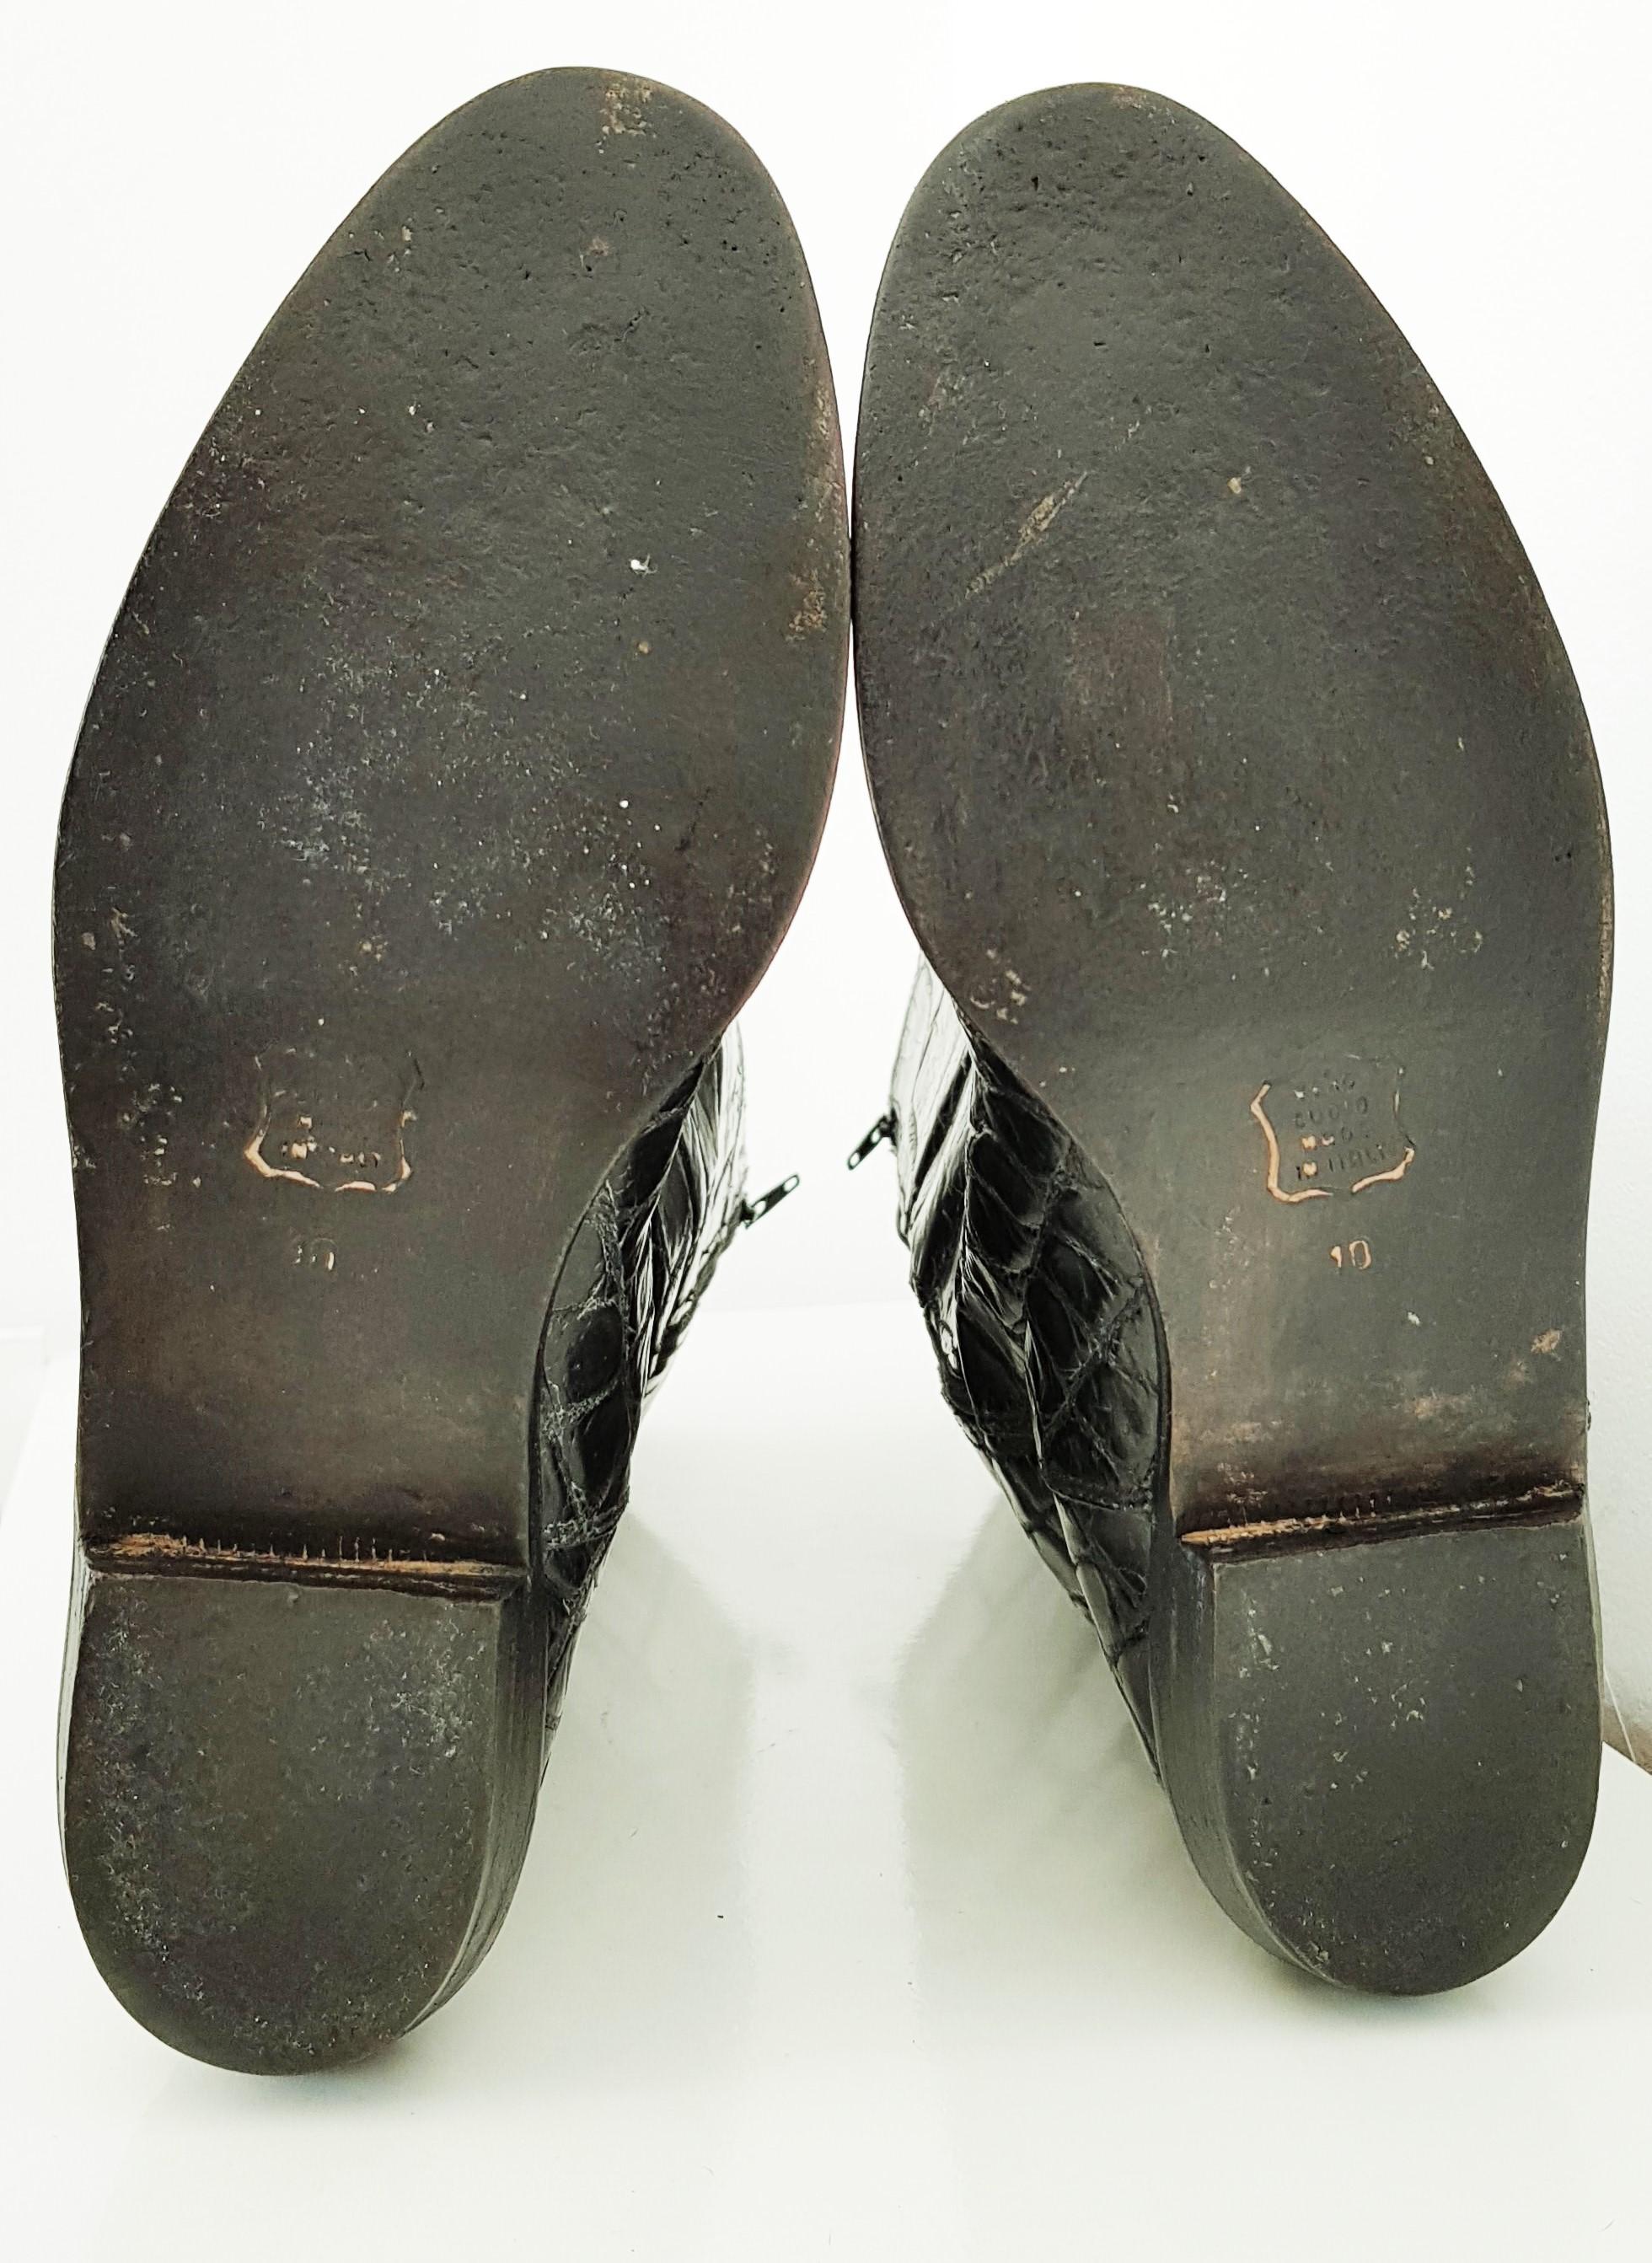 Hermès Black Wild Crocodile Boots - Size 10 (US) For Sale 5